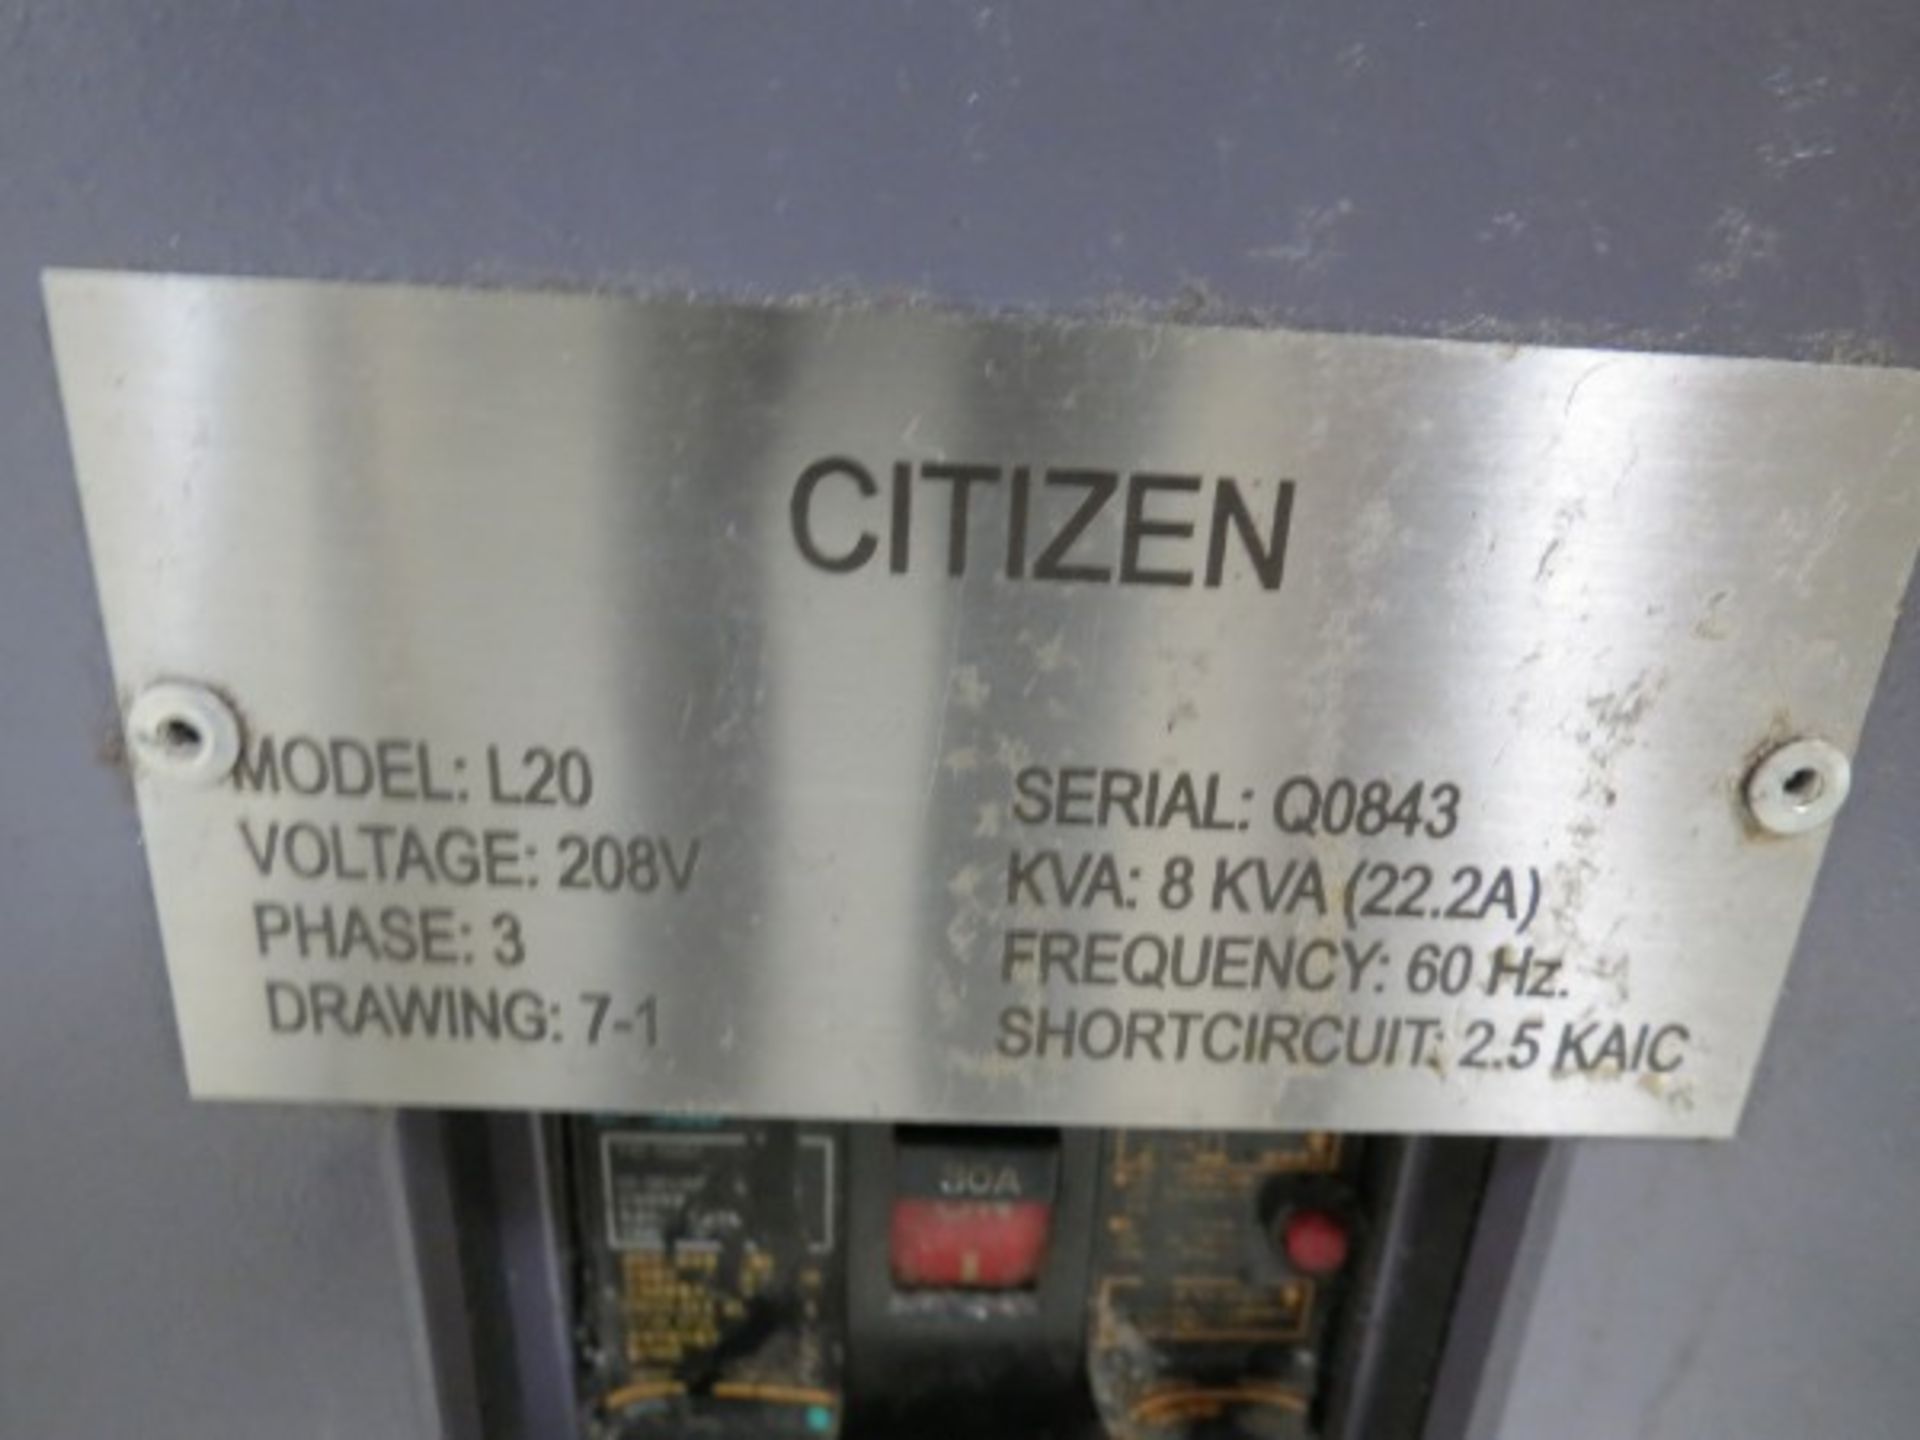 Citizen L20 CNC Swiss Screw Machine Mitsubishi Meldas ctrl sub-spindle live tools C axis, S/N Q0843 - Image 6 of 10